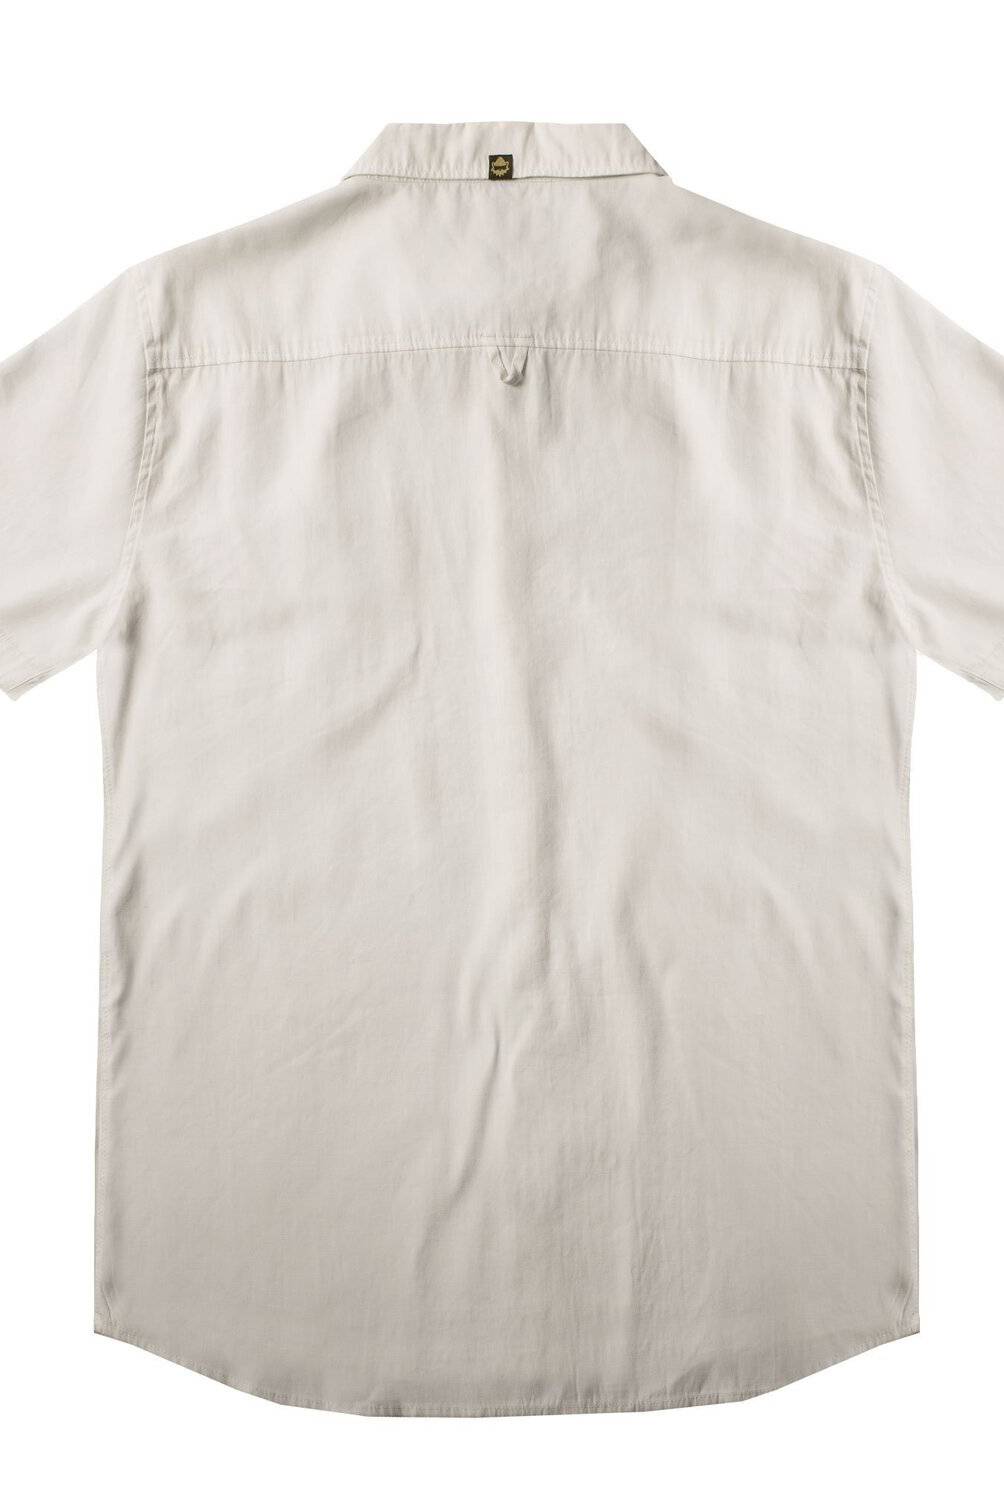 GNOMO - Camisa Hombre Nelka Bone Blanco